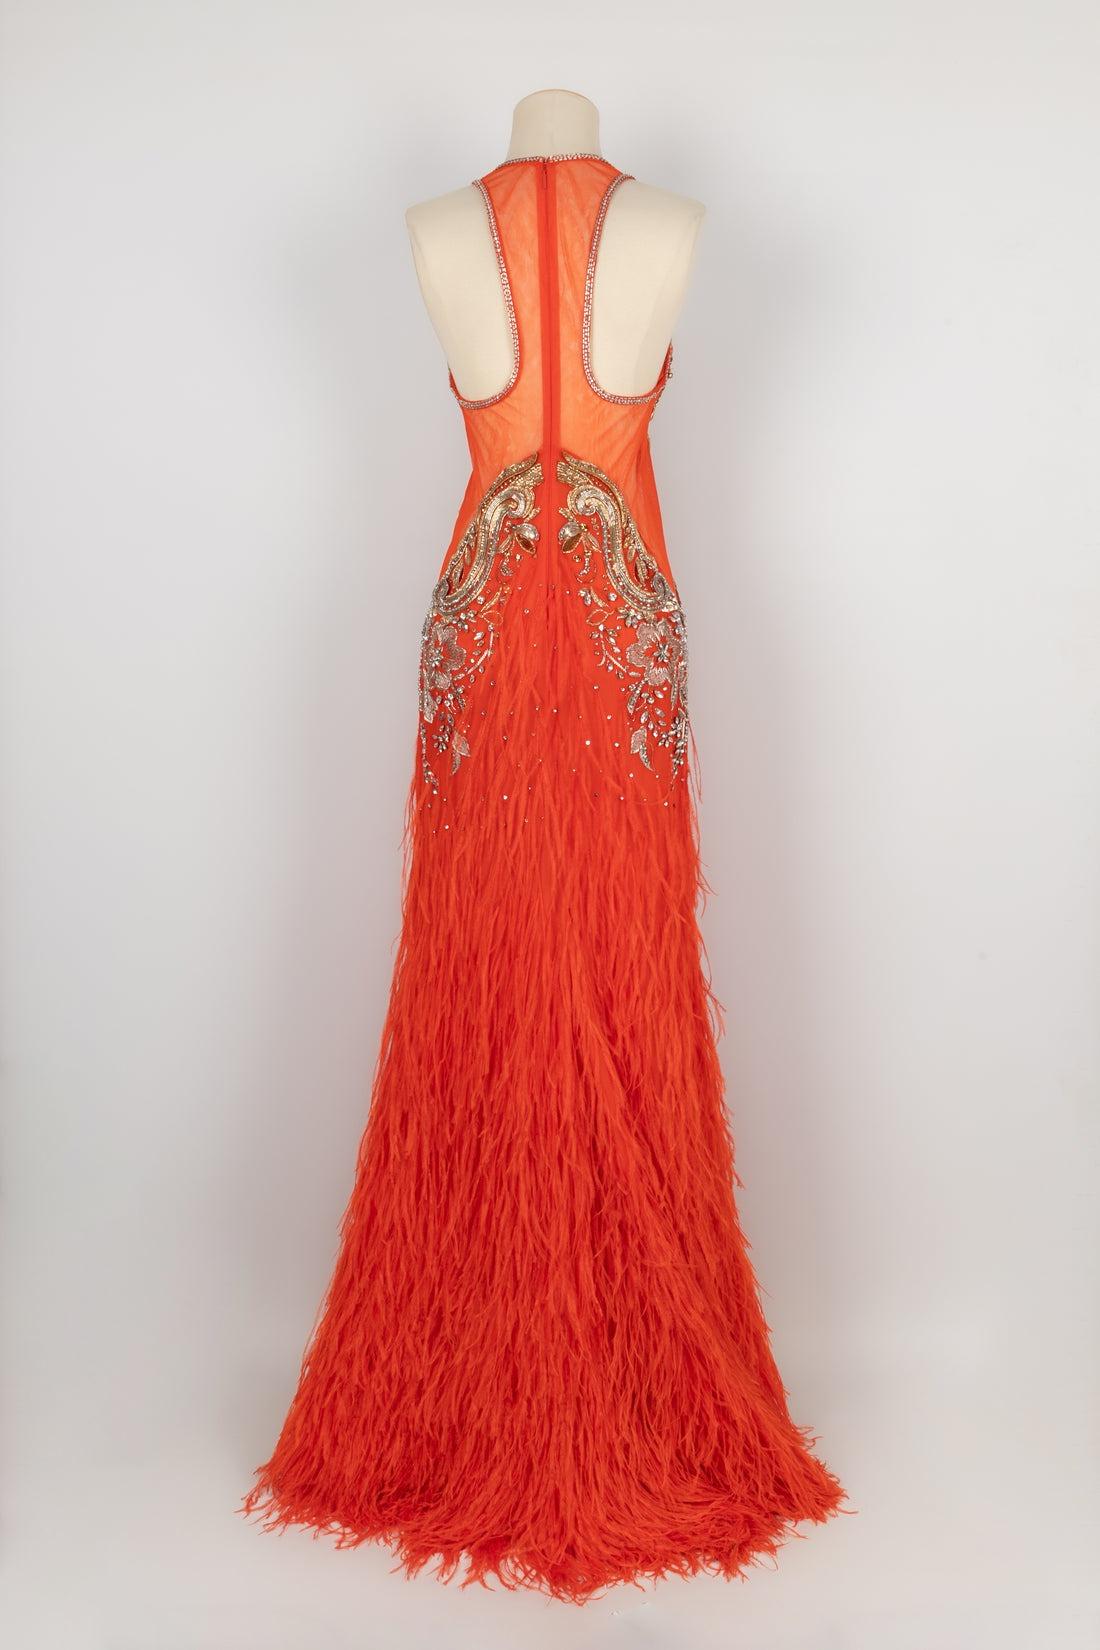 Cavalli Feather Long Orange Tulle Dress In Excellent Condition For Sale In SAINT-OUEN-SUR-SEINE, FR